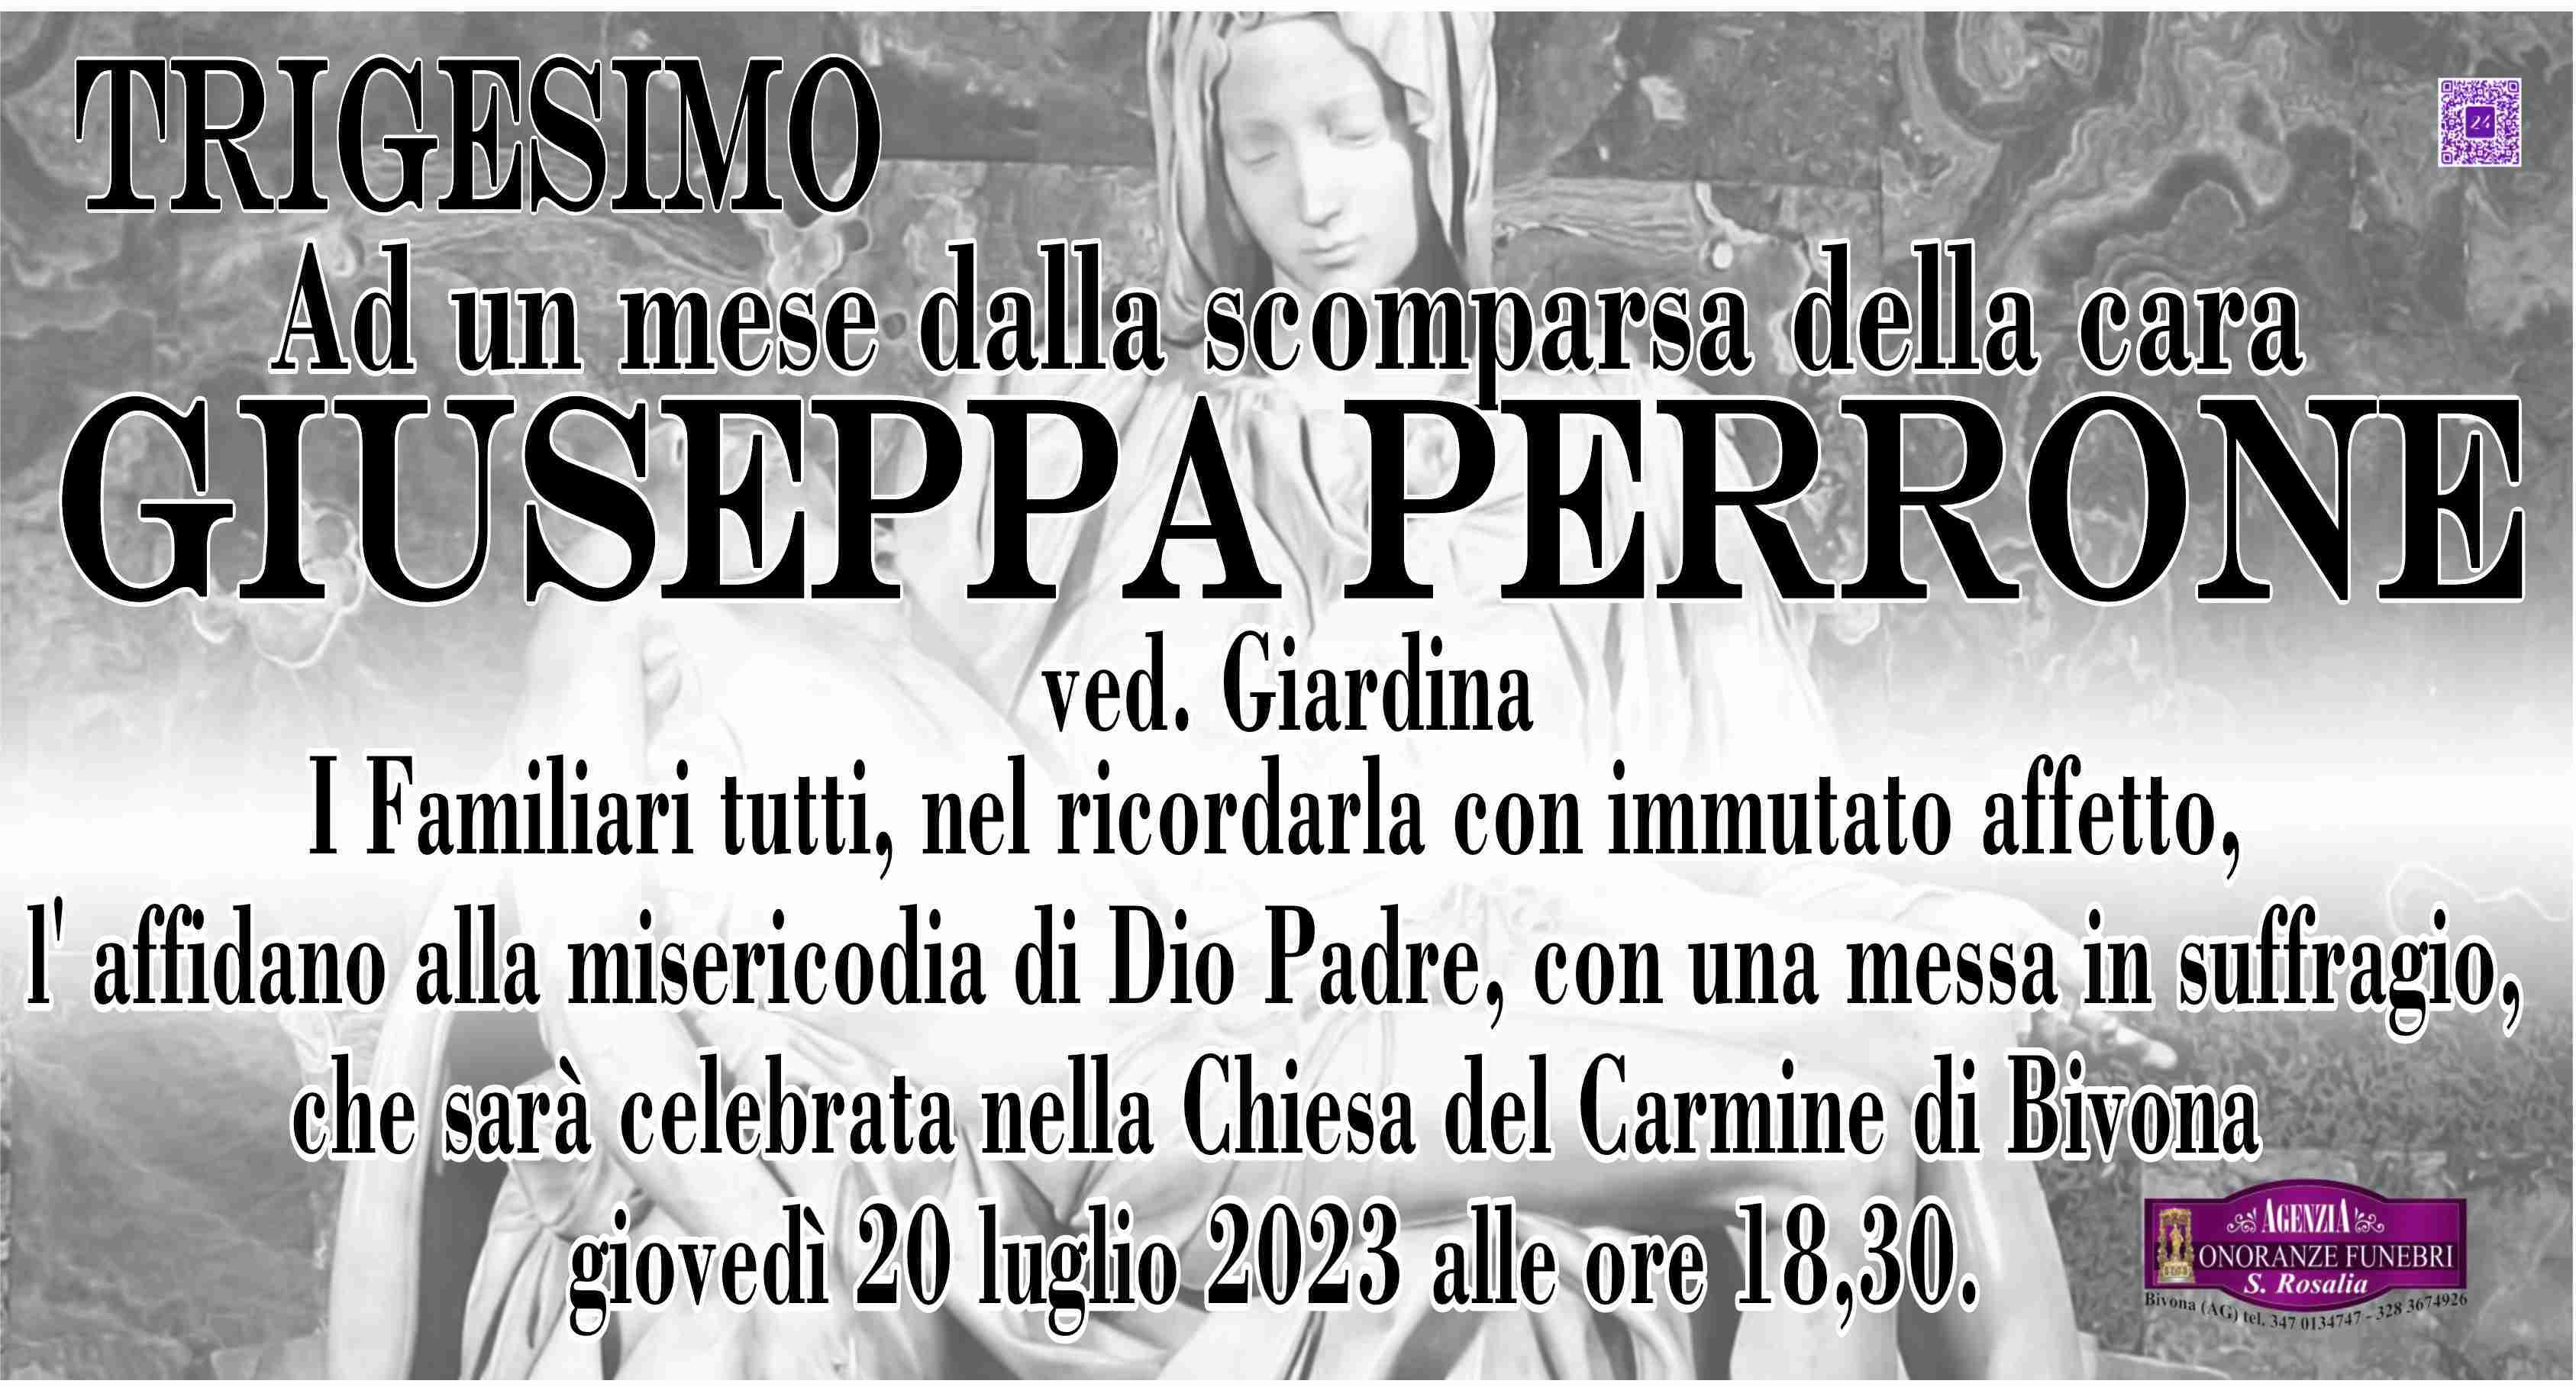 Giuseppa Perrone